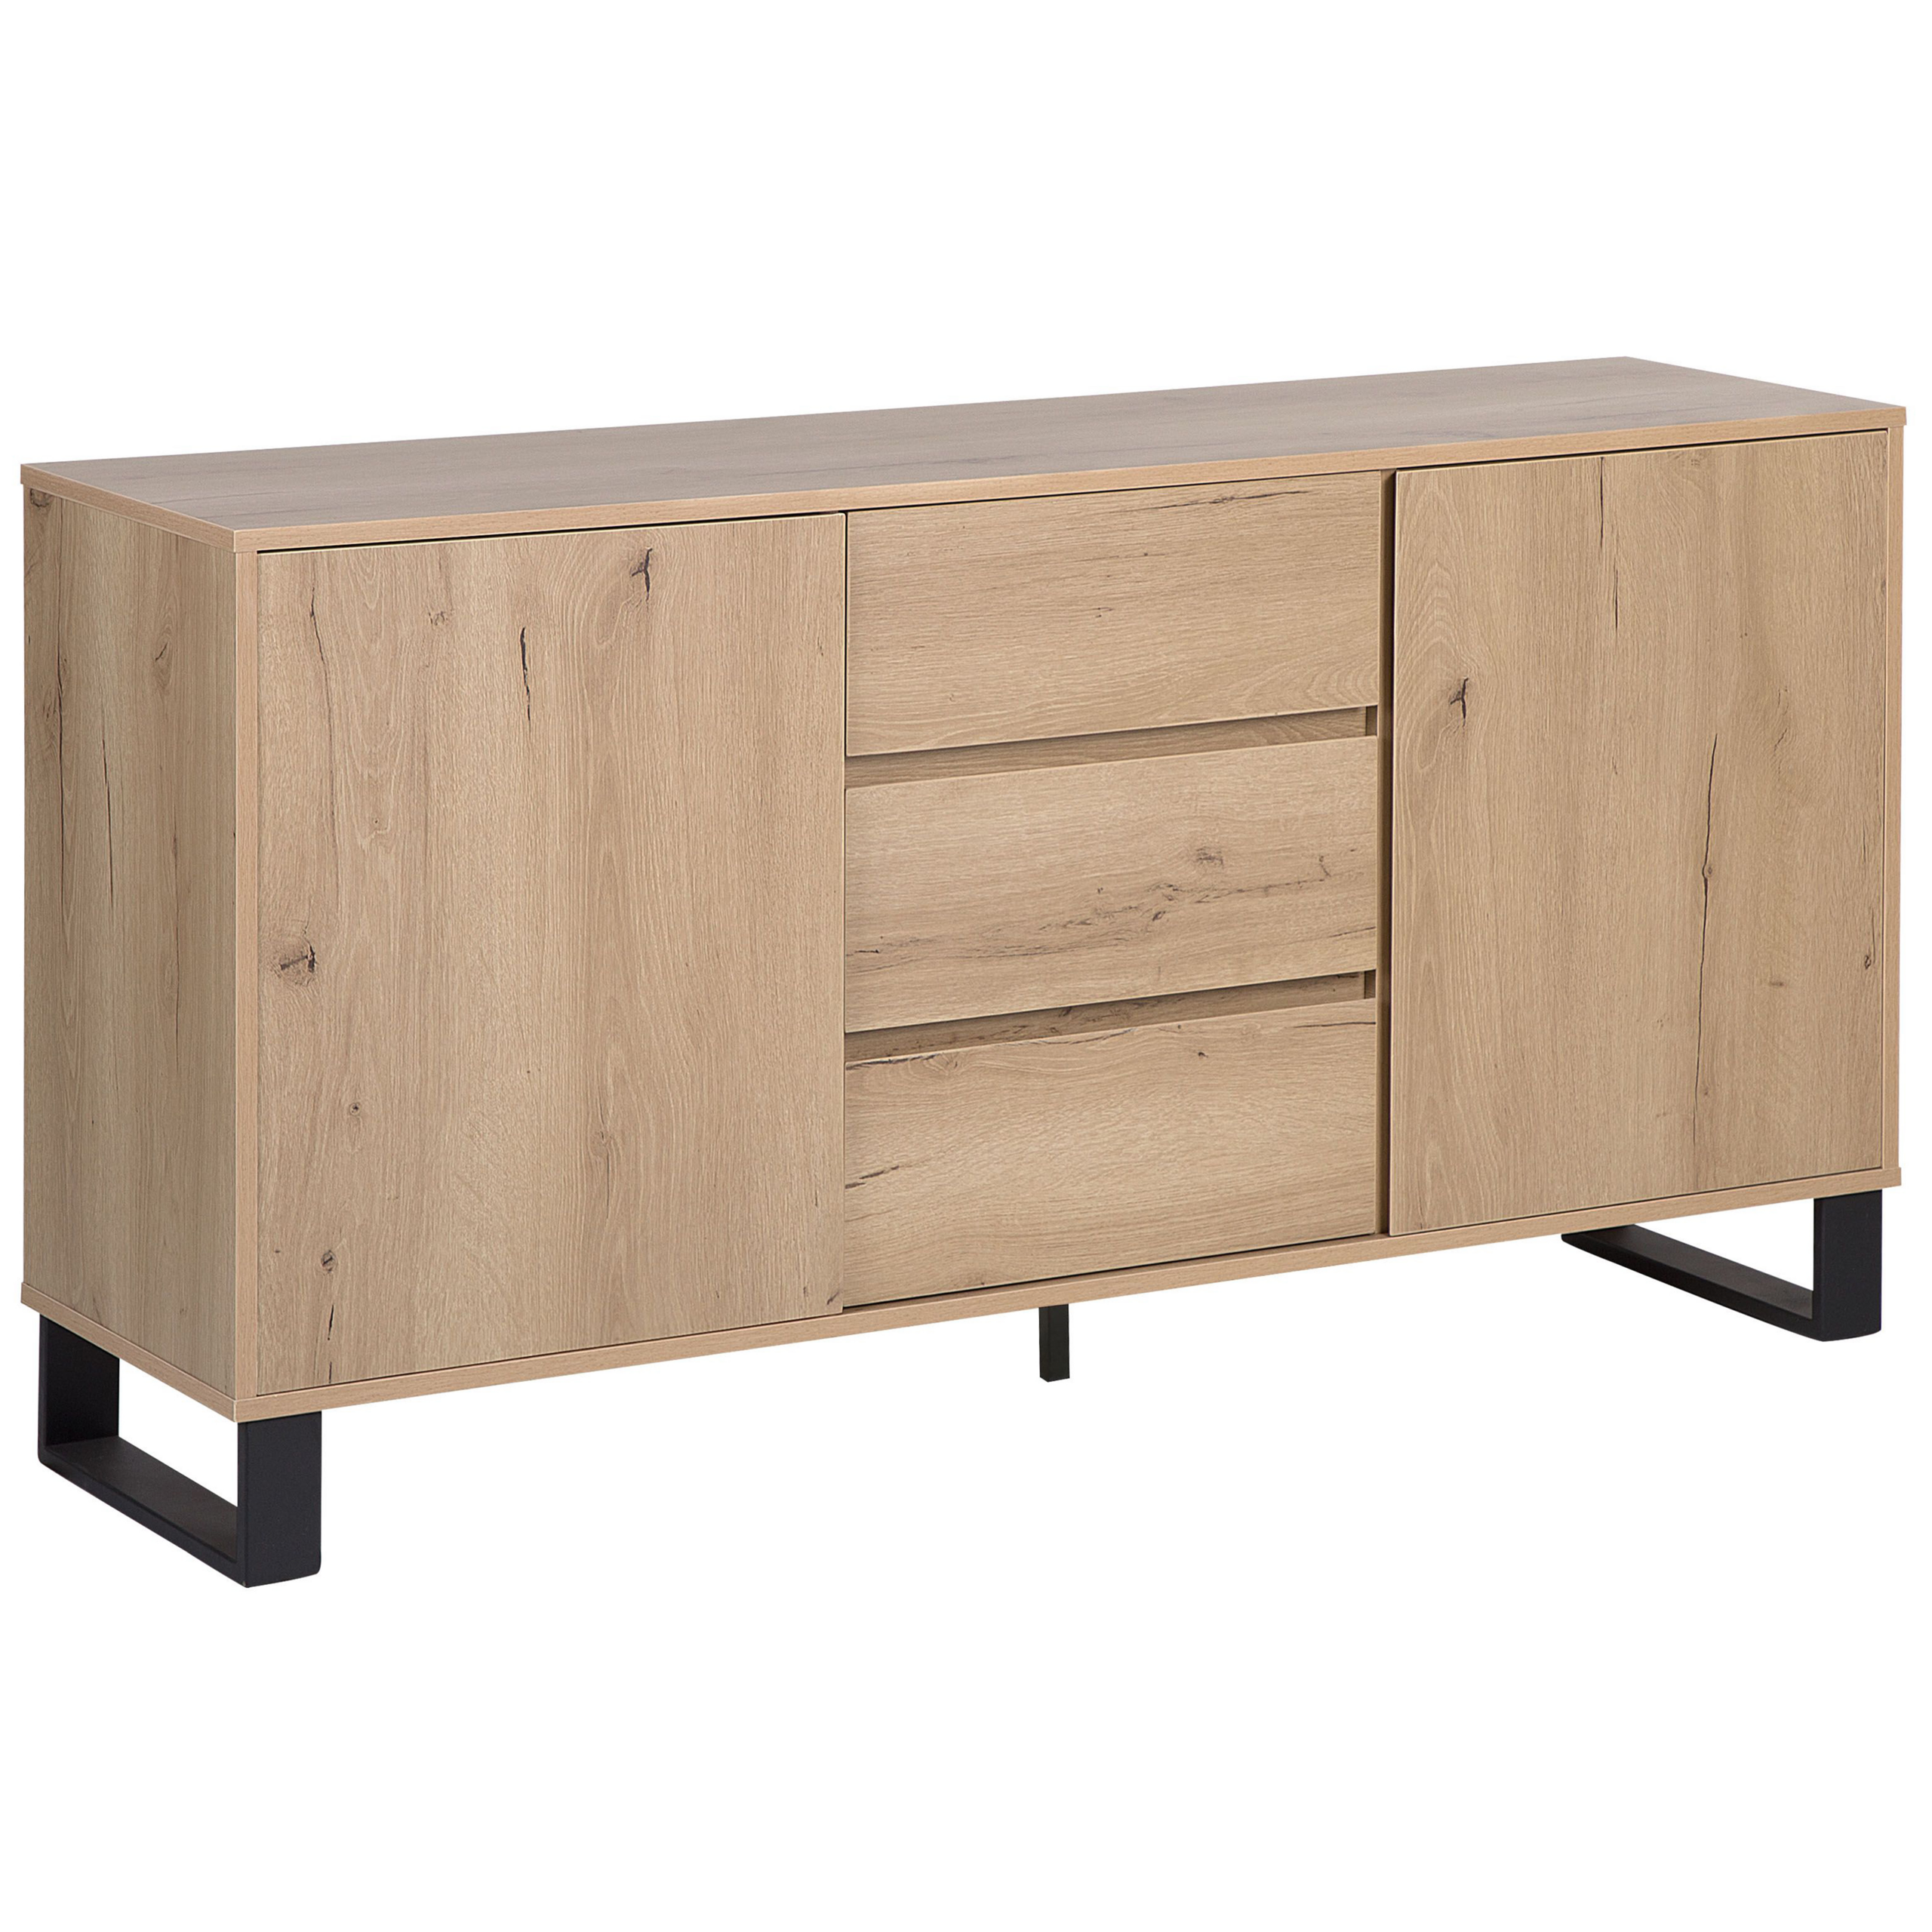 Beliani Sideboard Light Wood Chest of Drawers Cabinet Storage Unit Bedroom Living Room